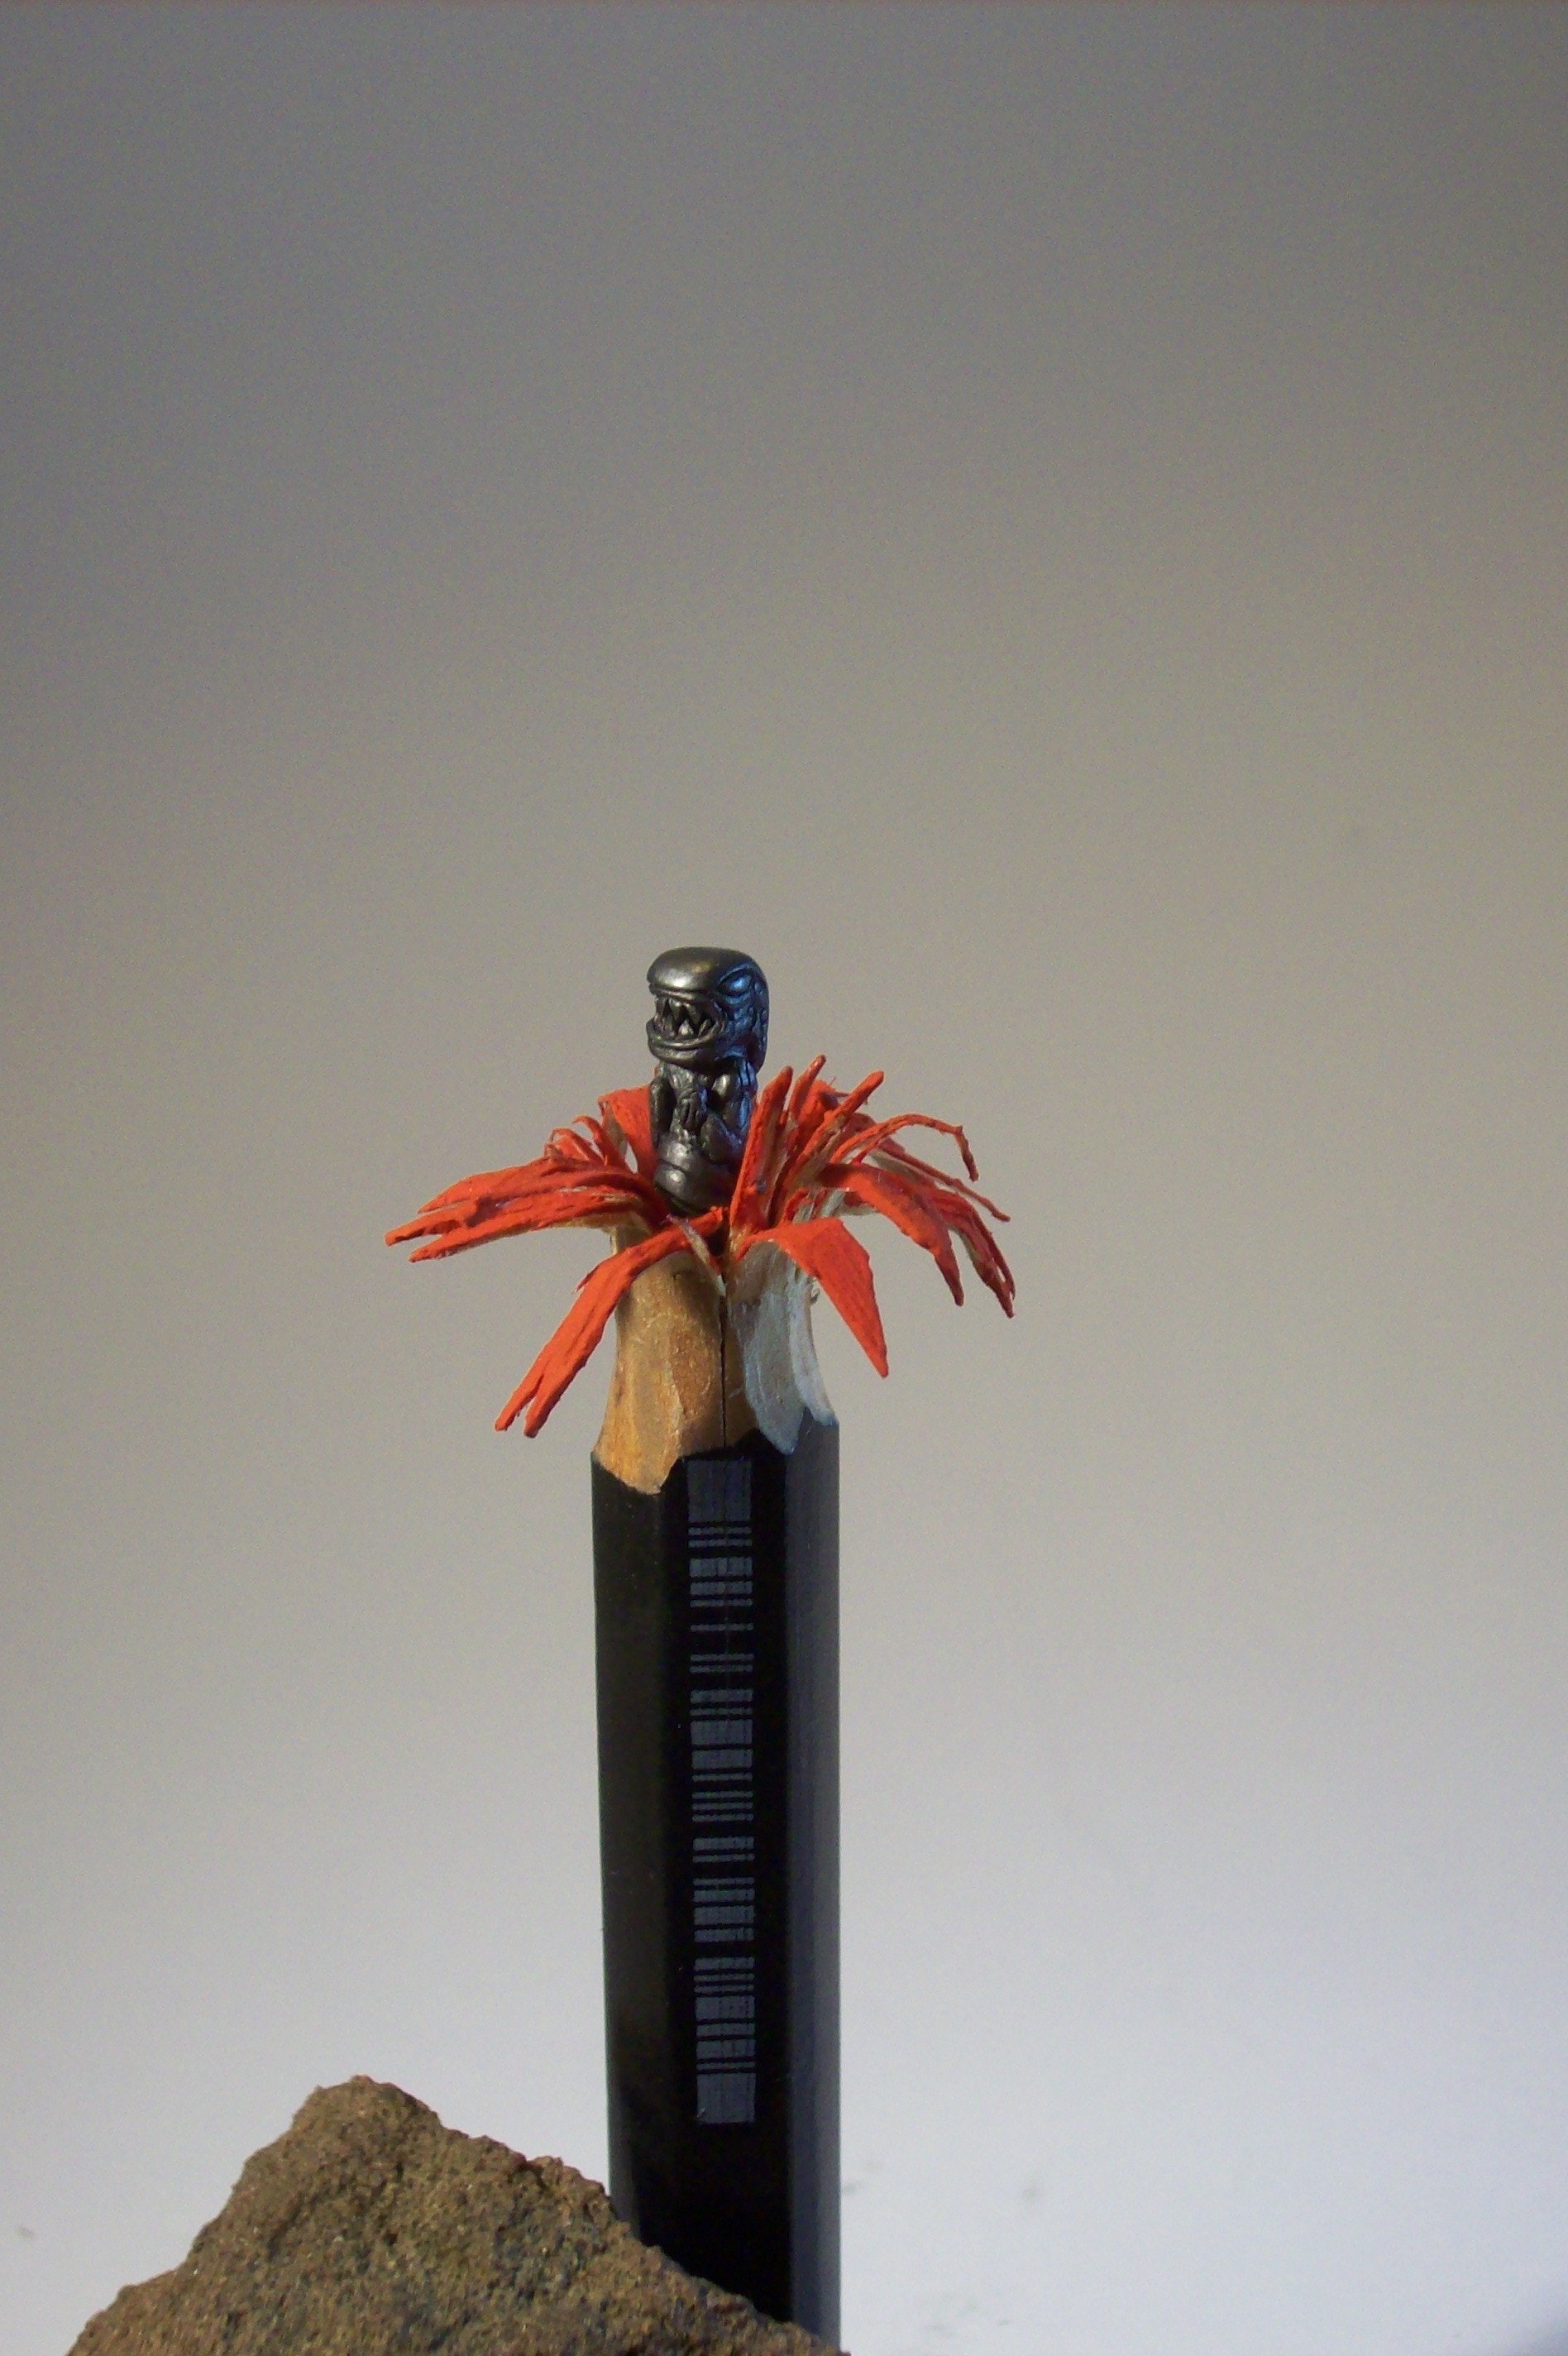 The pencilburster :)